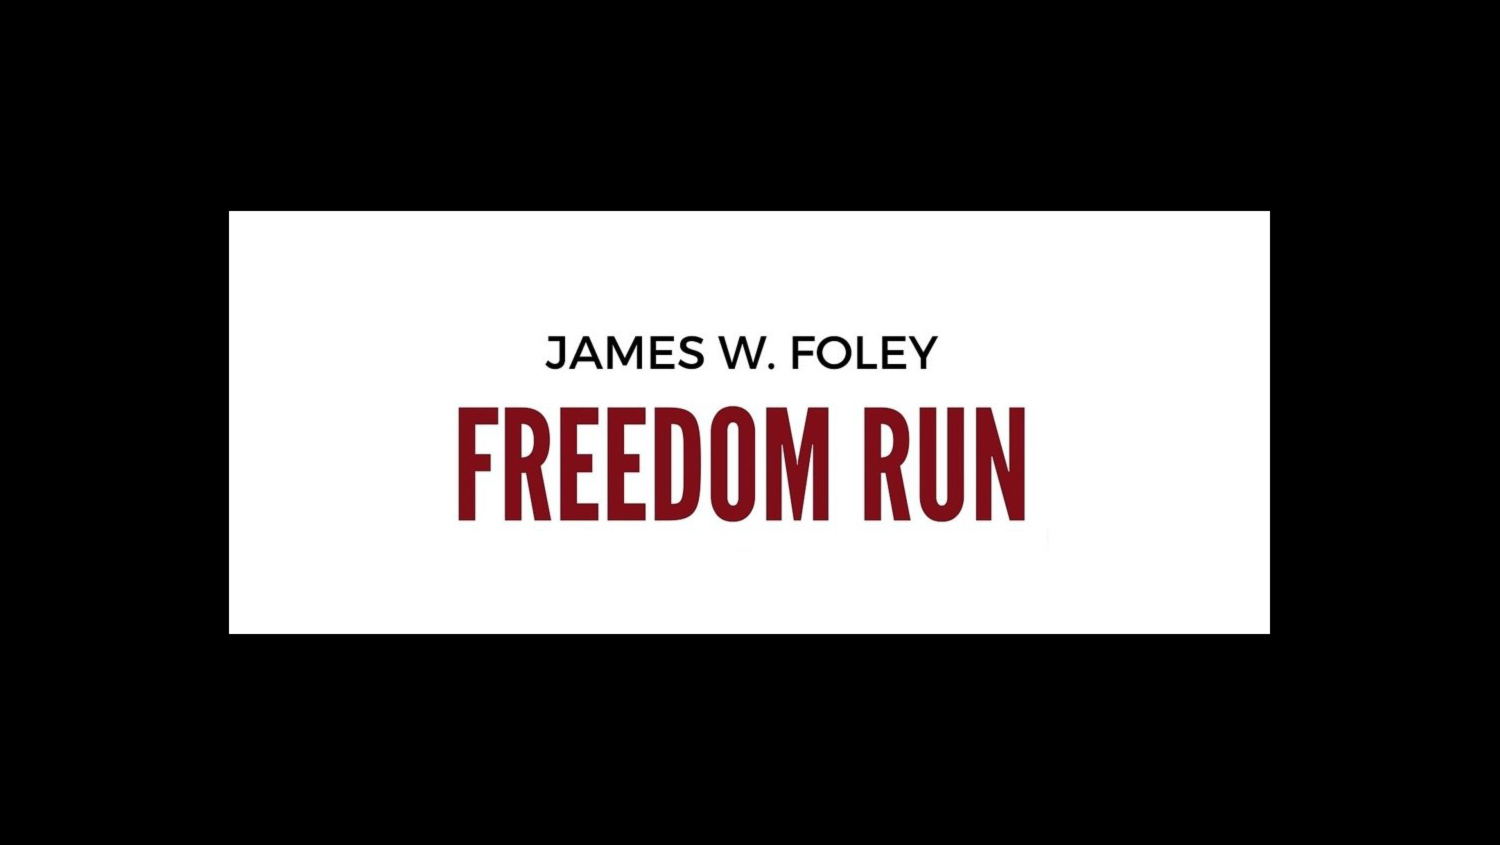 Foley Foundation Formalizes 5K Freedom Run/Walk, Washington, D.C.